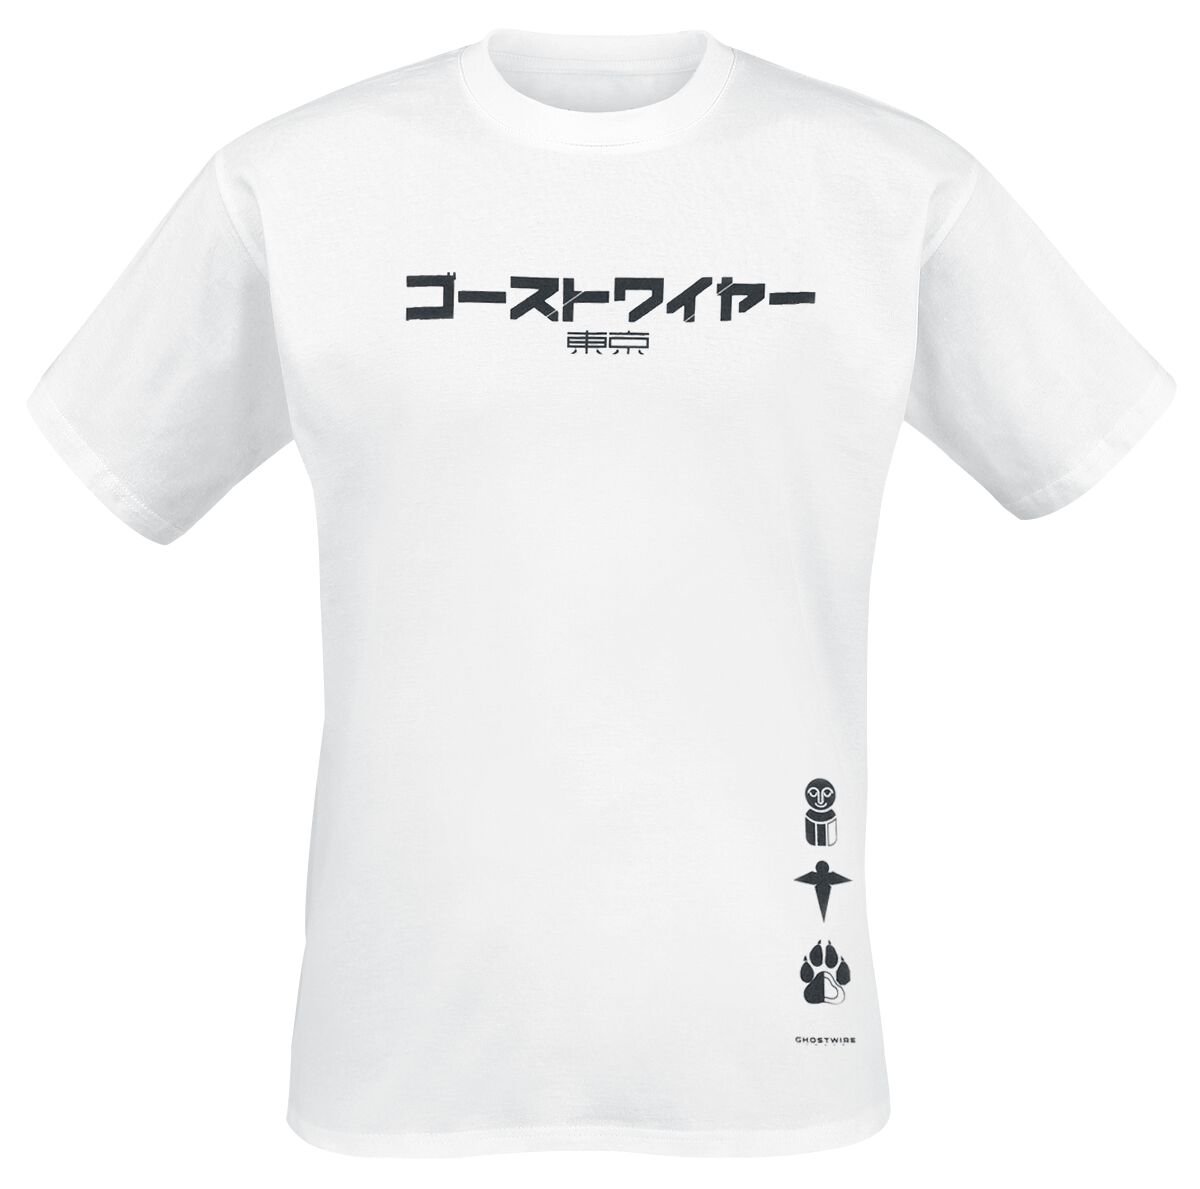 Ghostwire Tokyo Black Kanji Symbols T-Shirt white